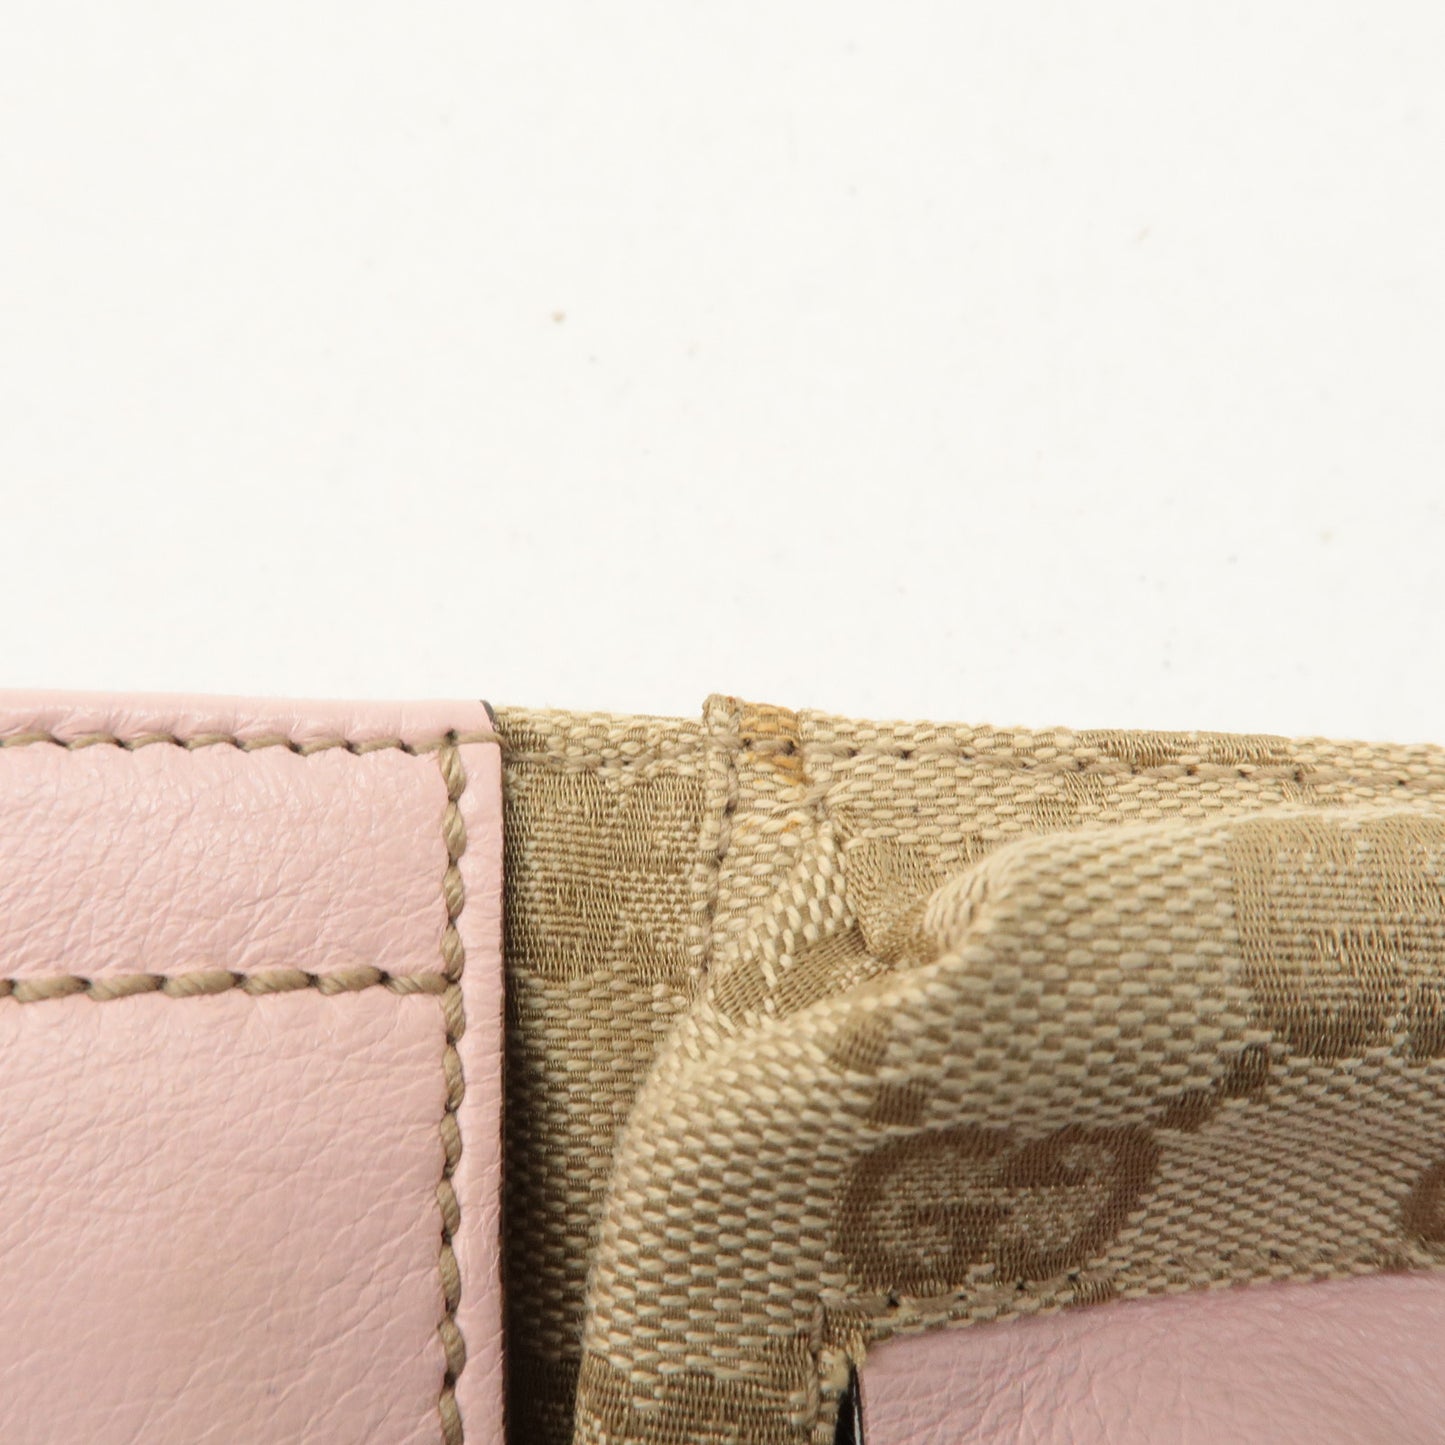 GUCCI GG Canvas Leather Waist Bag Crossbody Bag Beige Pink 28566